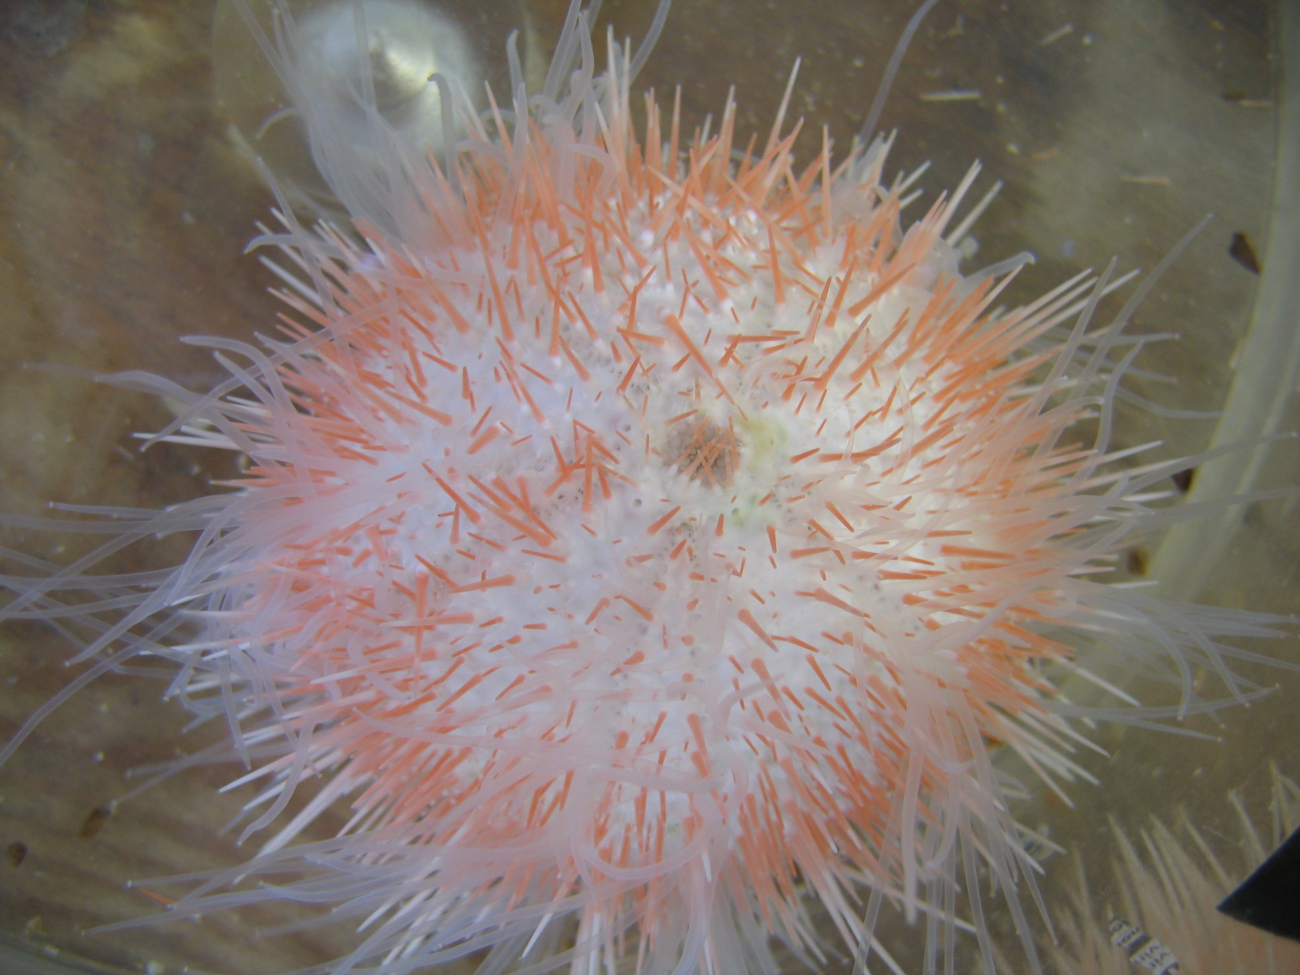 A beautiful sea urchin